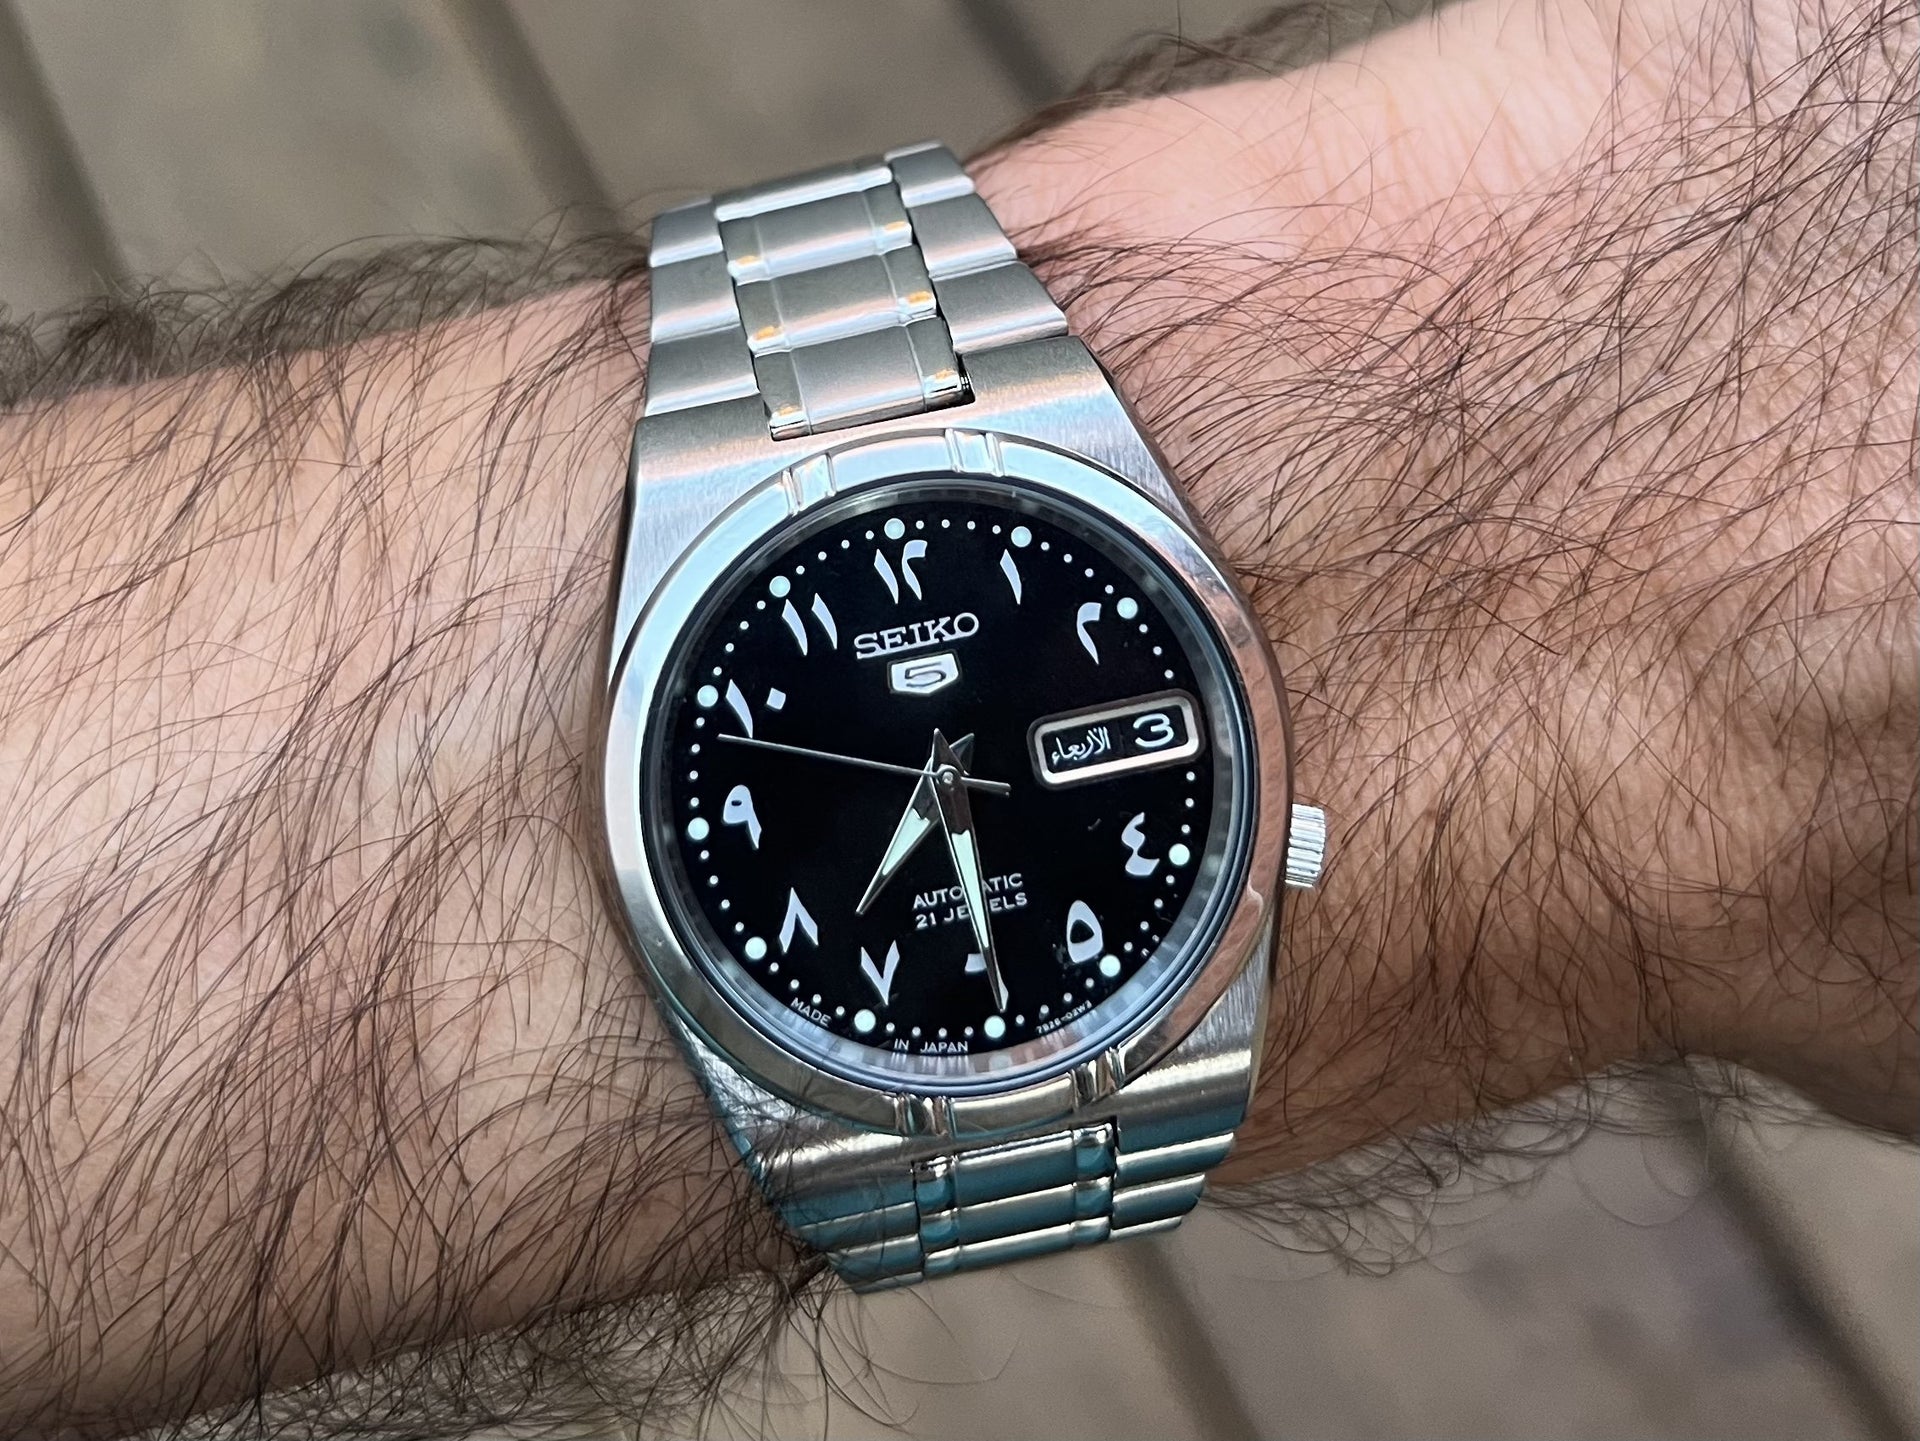 New watch day - Arabic dial | WatchUSeek Watch Forums